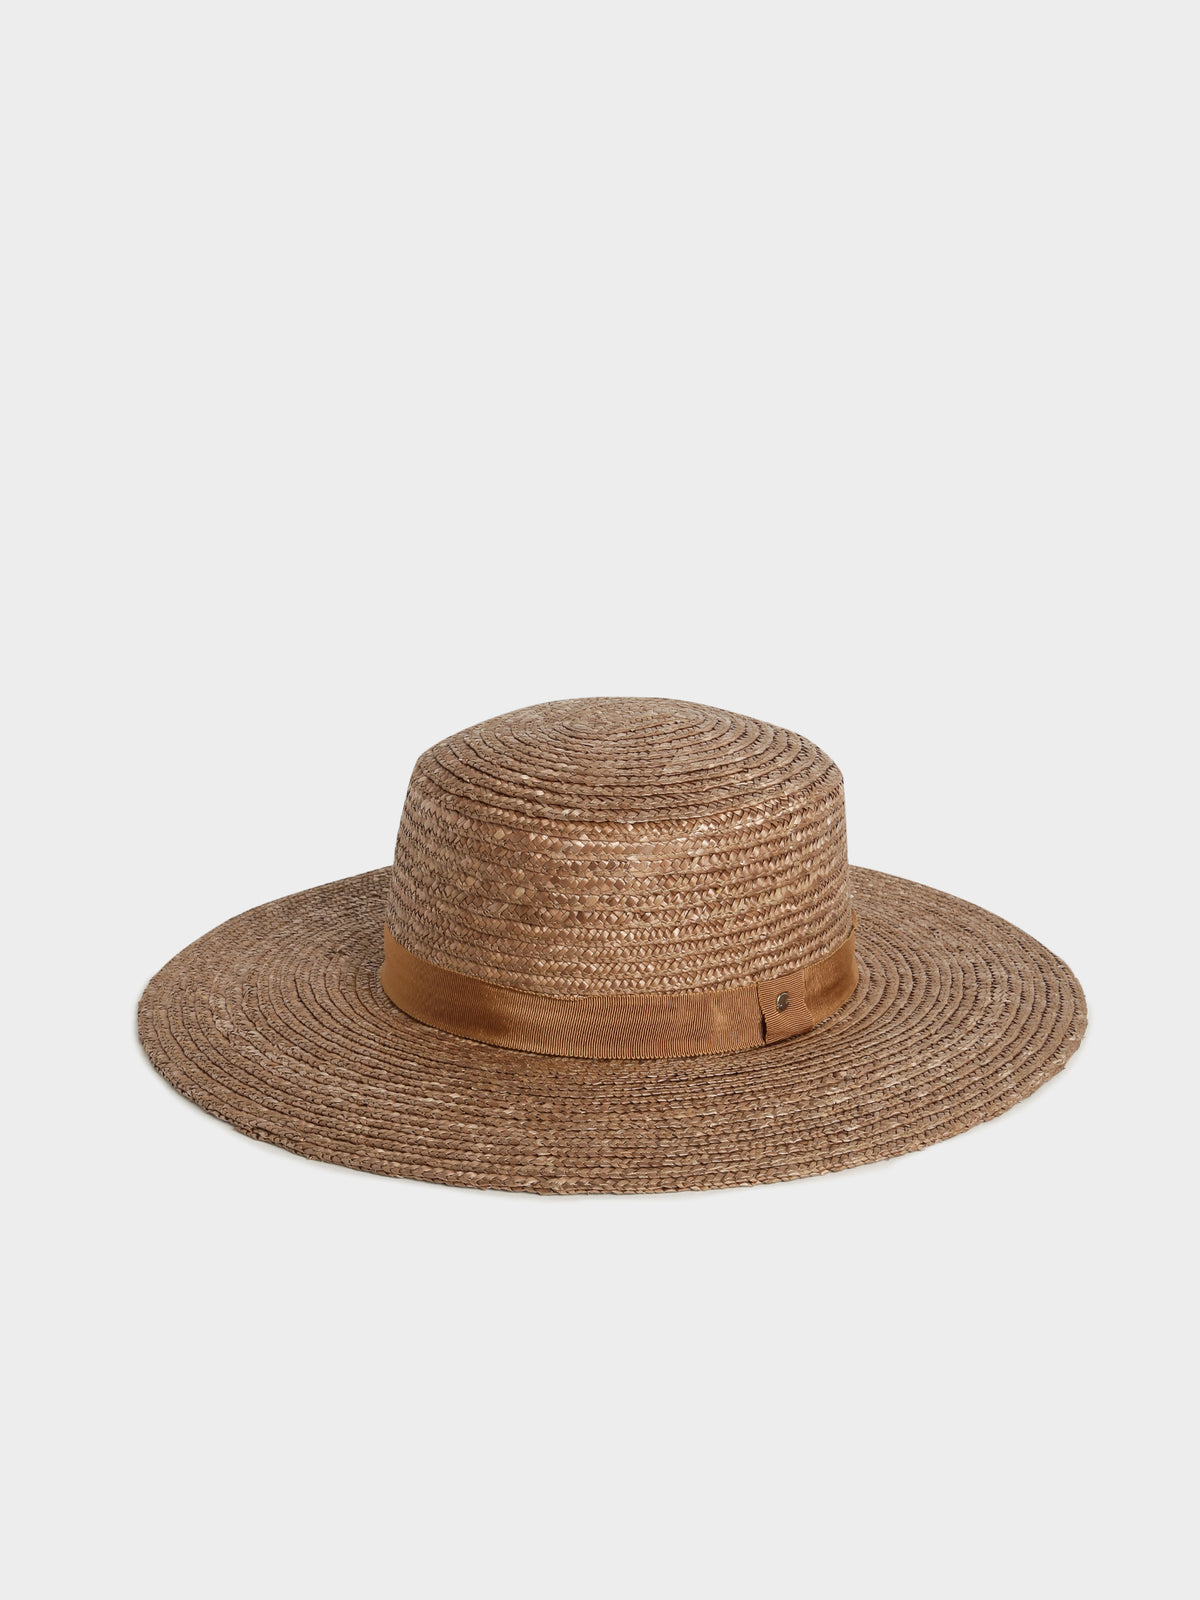 Vicenza Straw Hat in Nutmeg